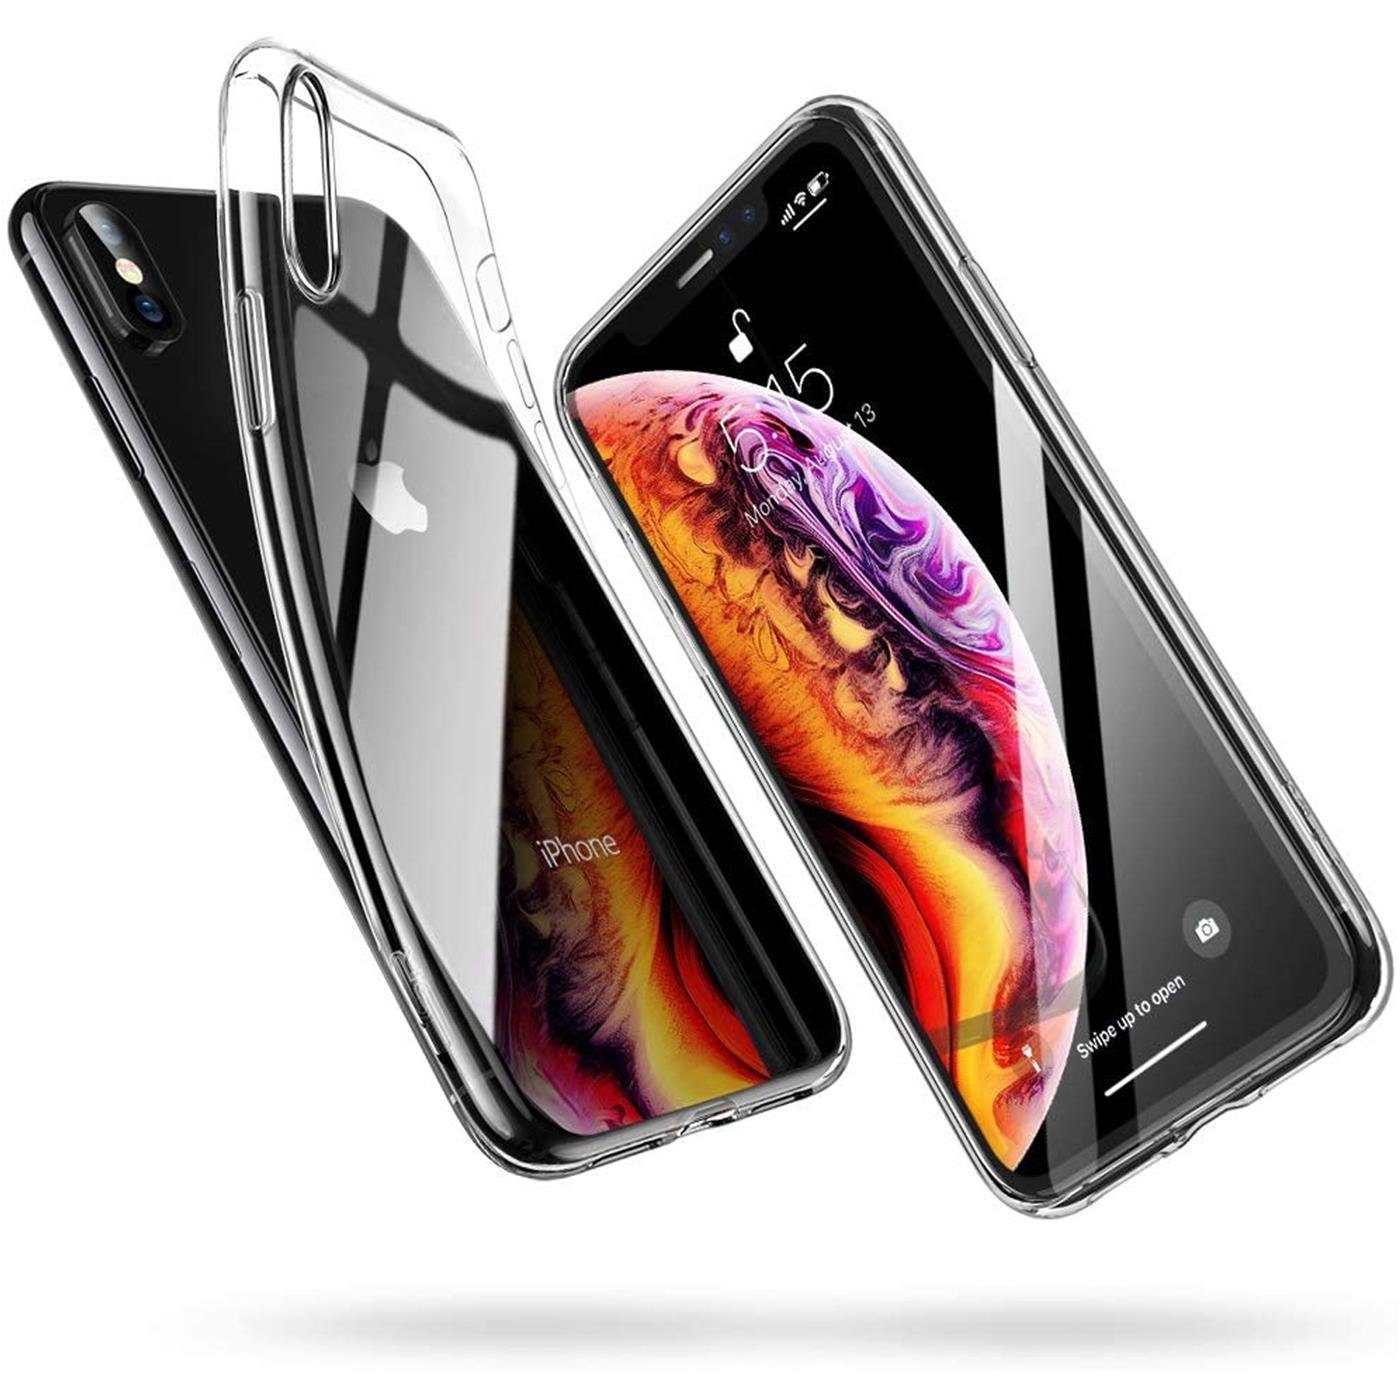 CoolGadget Handyhülle Transparent Ultra Slim Case für Apple iPhone X/XS 5,8 Zoll, Silikon Hülle Dünne Schutzhülle für iPhone X, iPhone XS Hülle